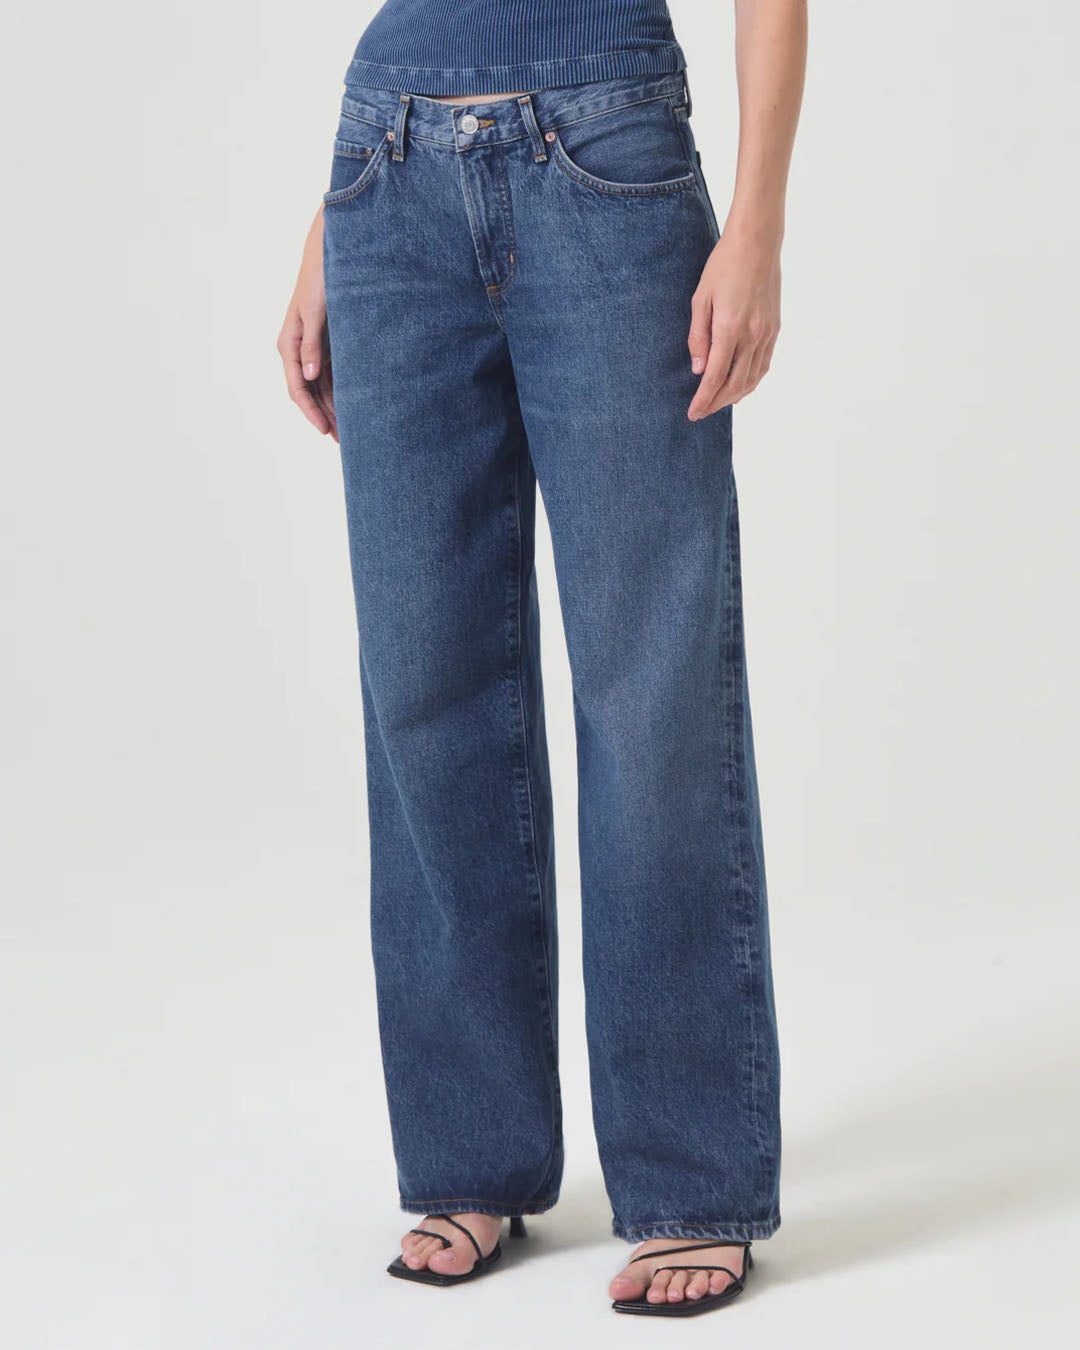 Agolde Fushion Jeans